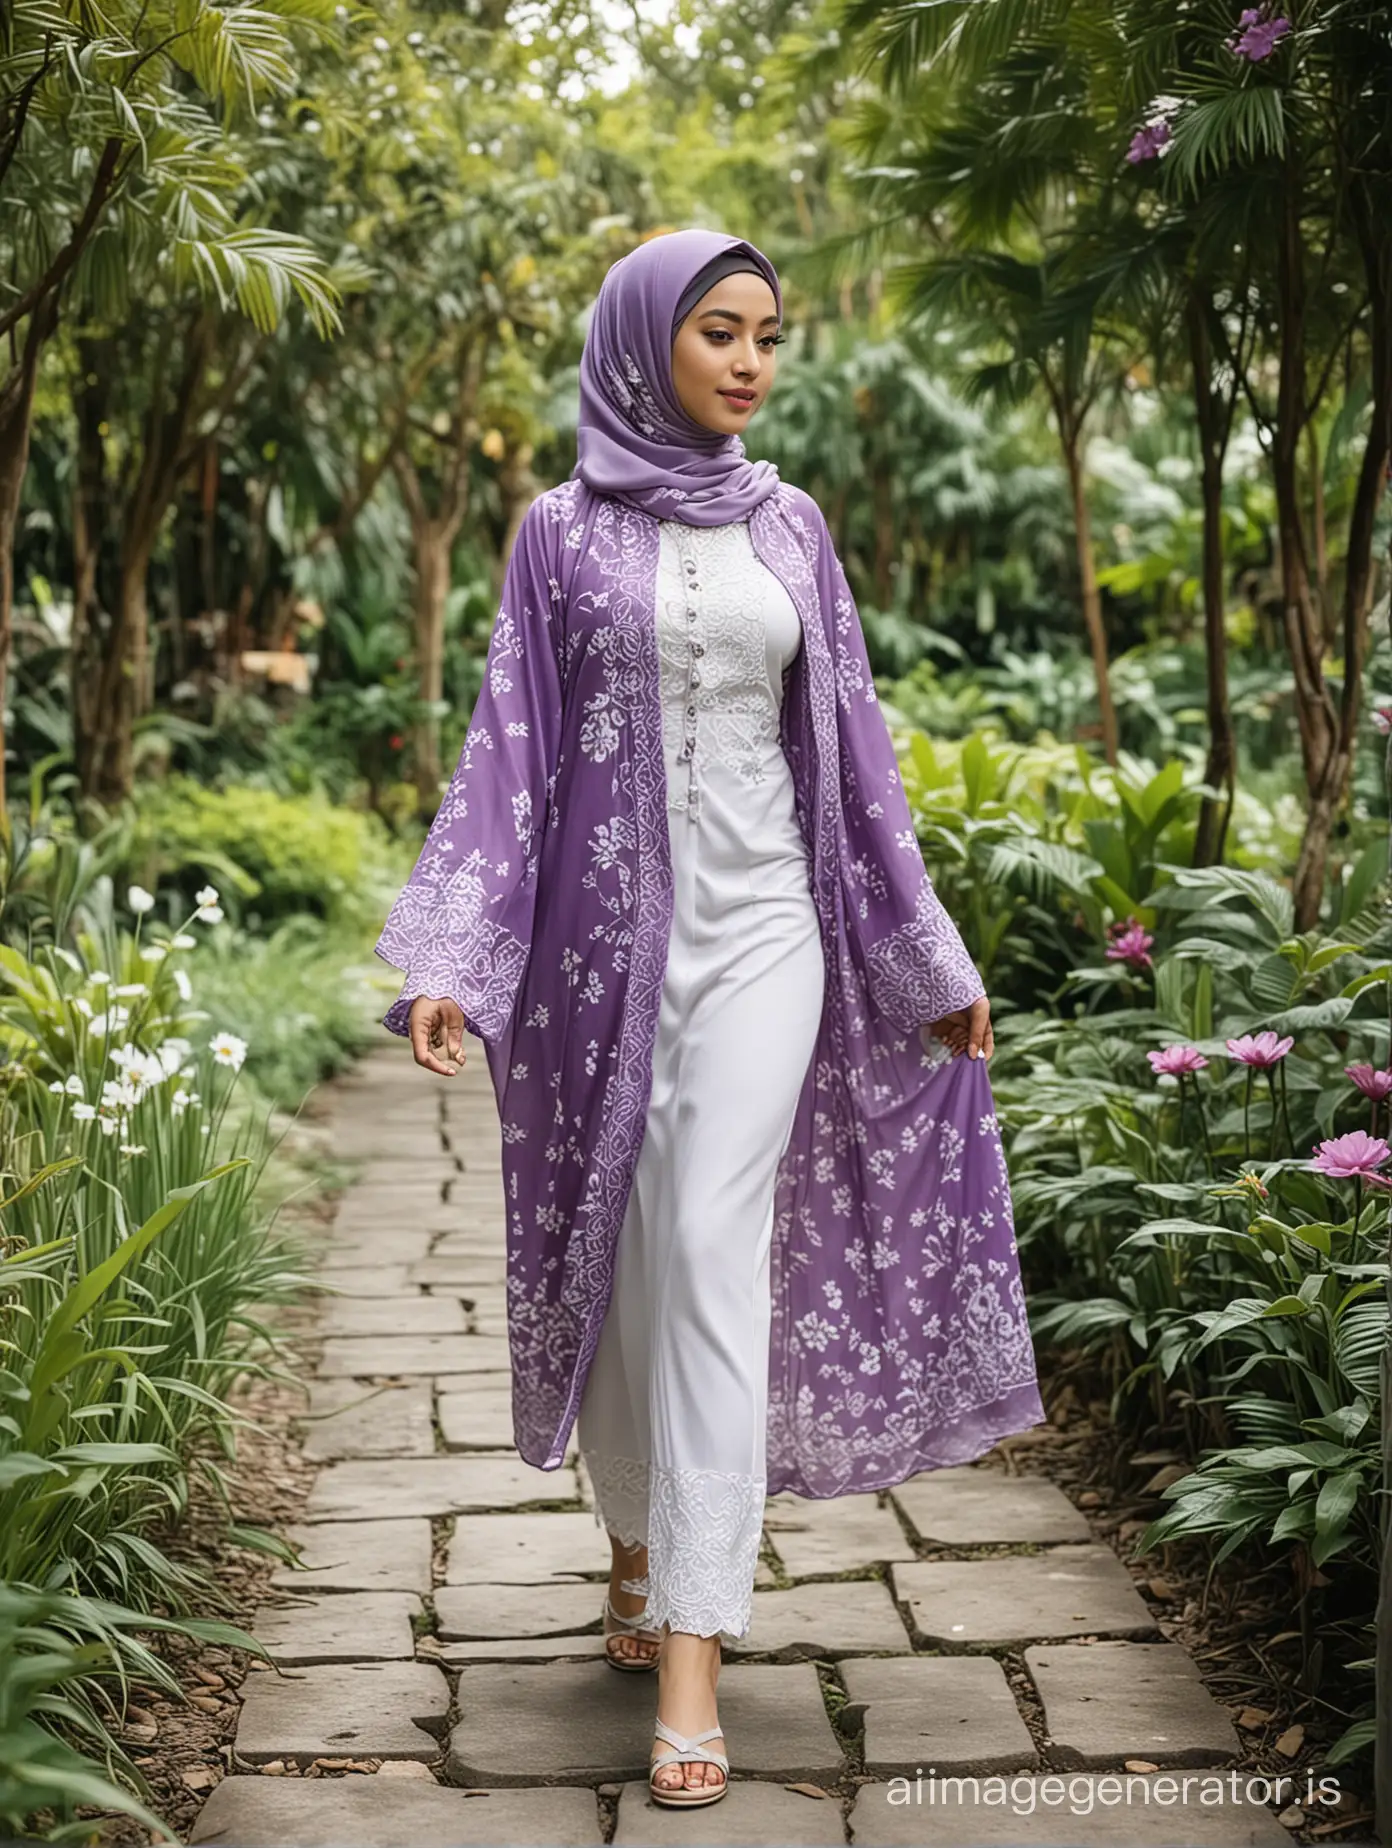 Elegant-Hijab-Girl-Strolling-Amidst-Floral-Splendor-in-Purple-and-White-Kebaya